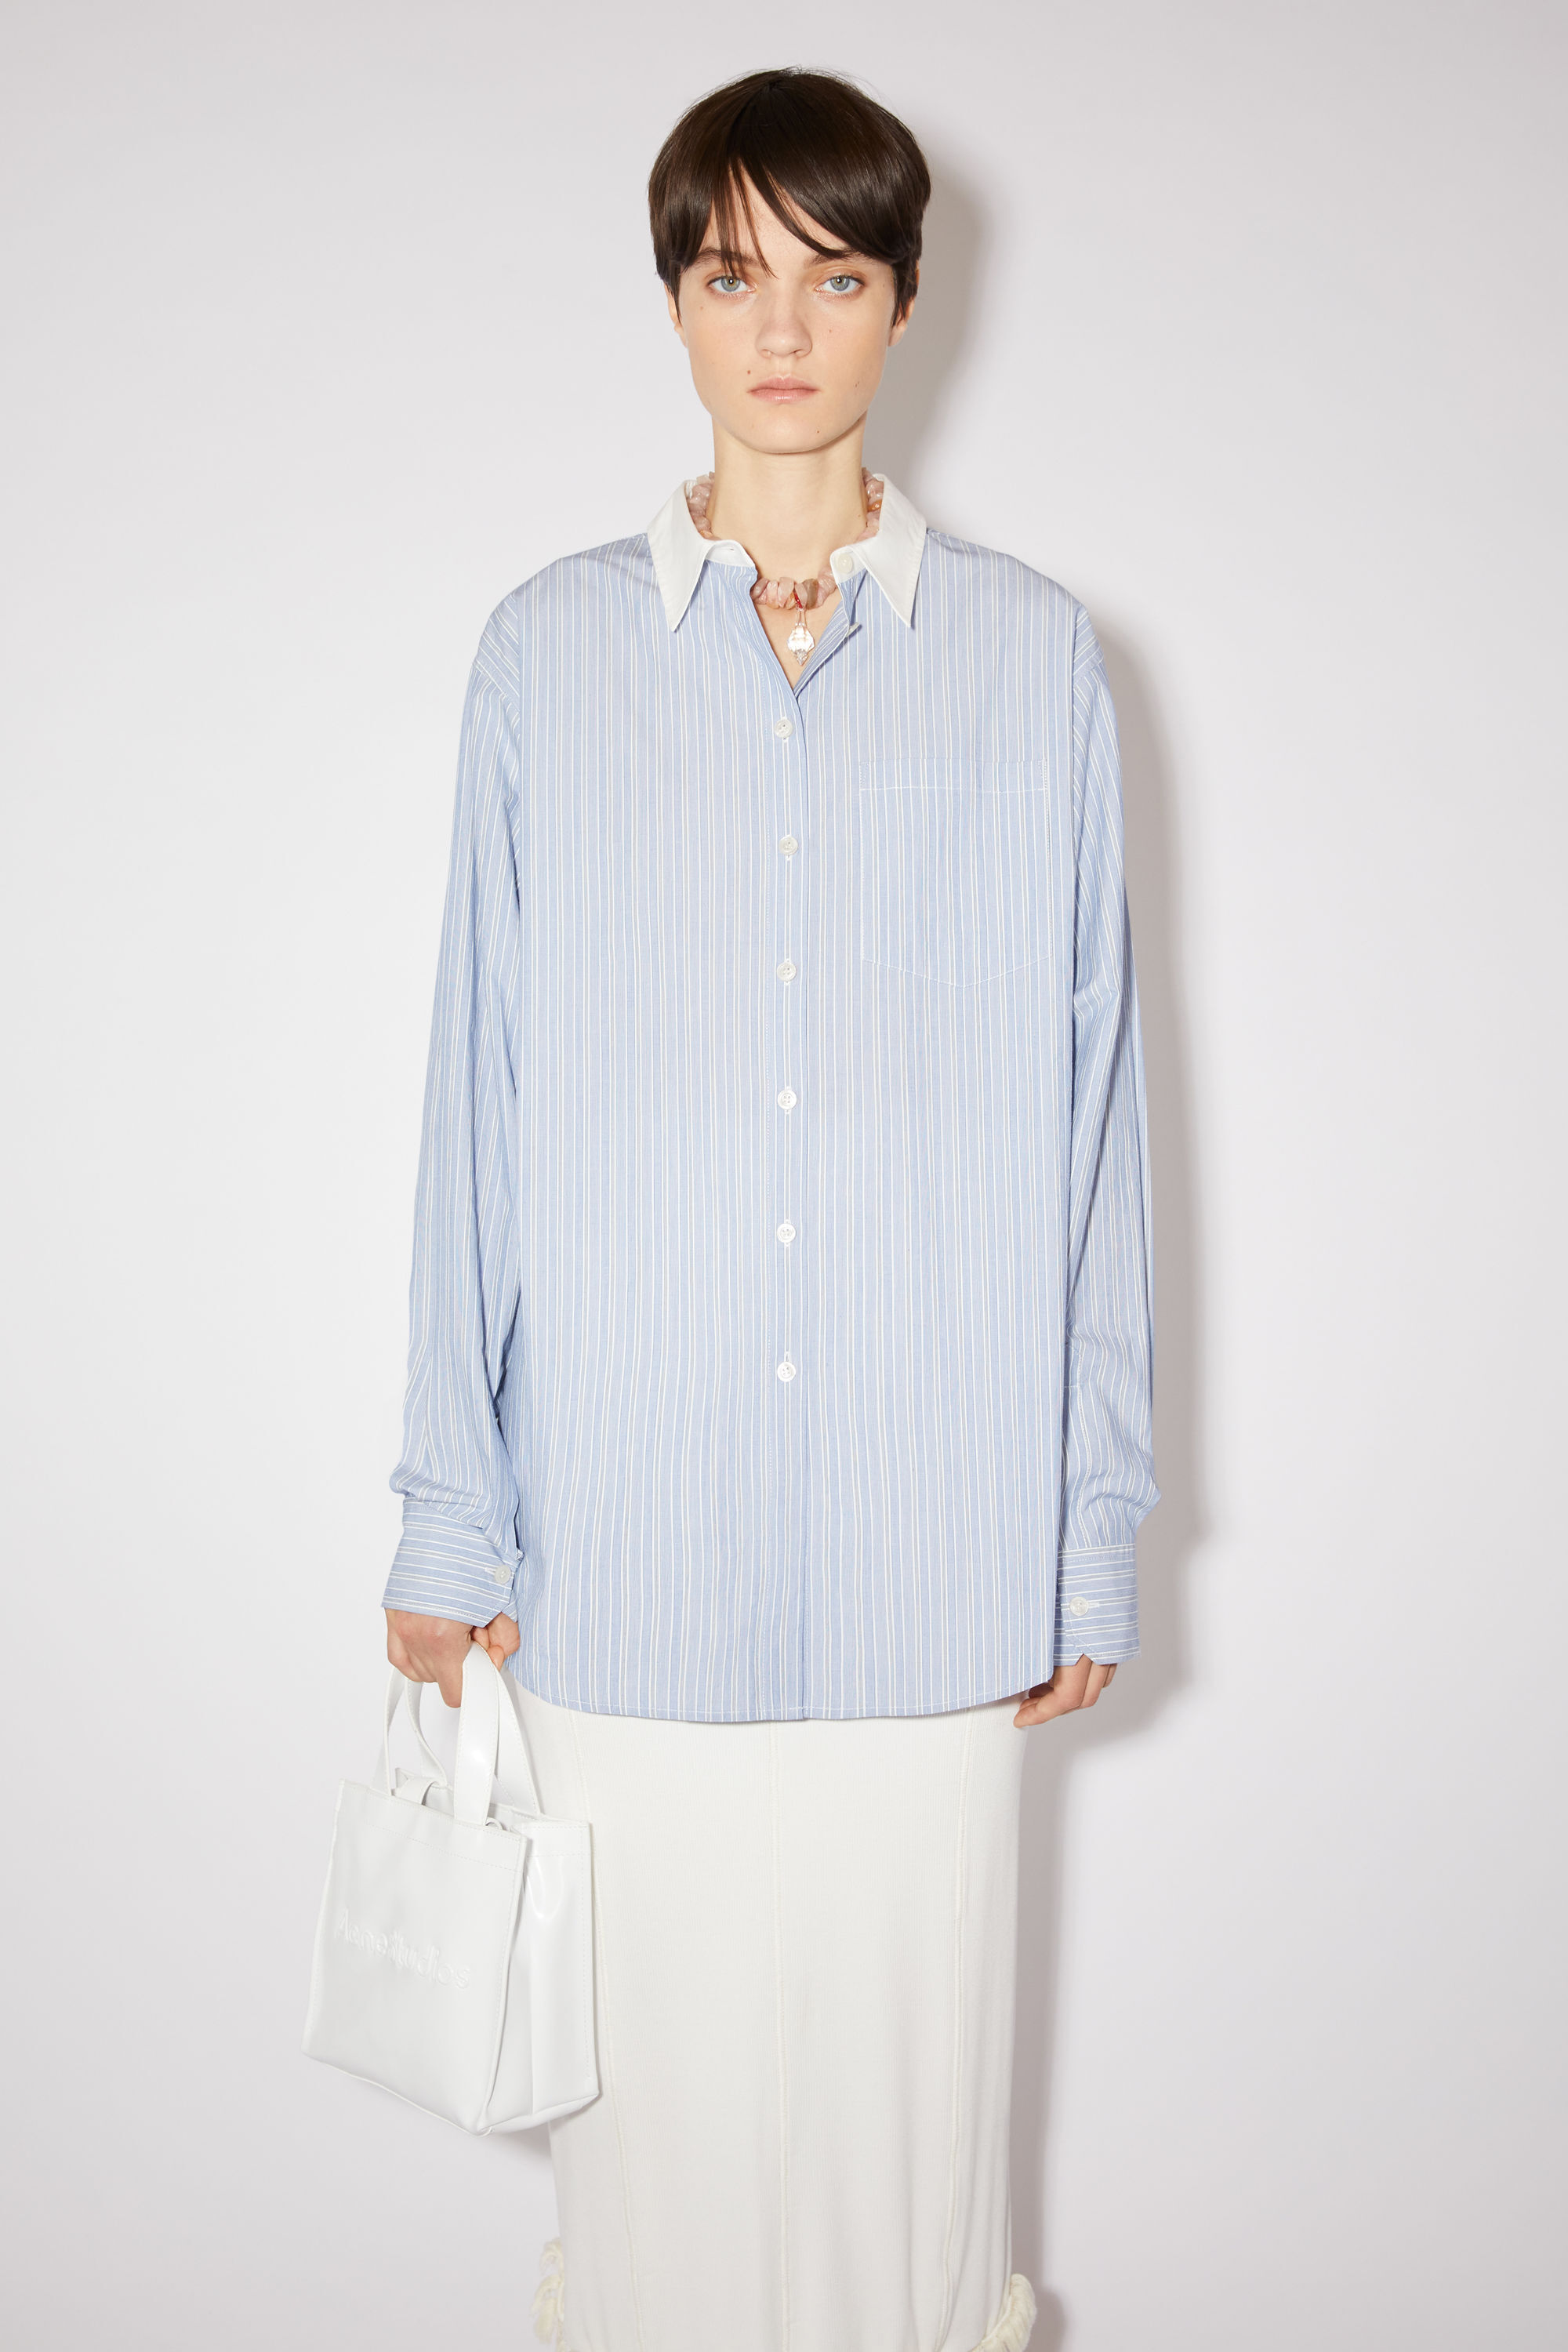 Acne Studios - Striped cotton shirt - Blue/white